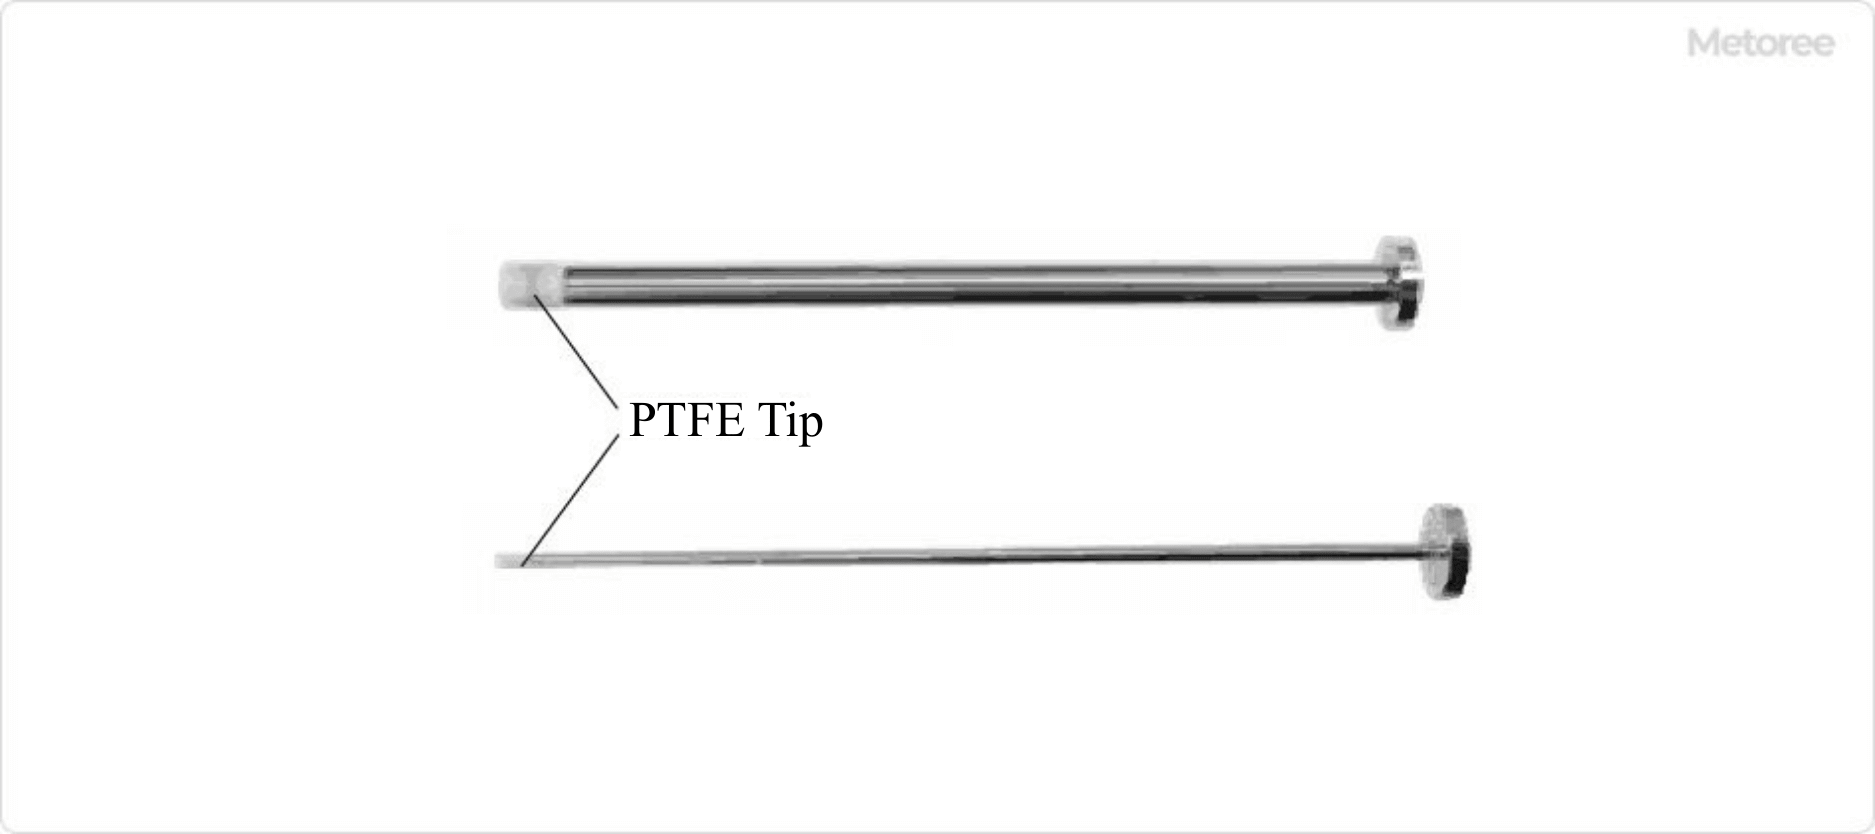 Figure 2. Plunger on gas tight syringe